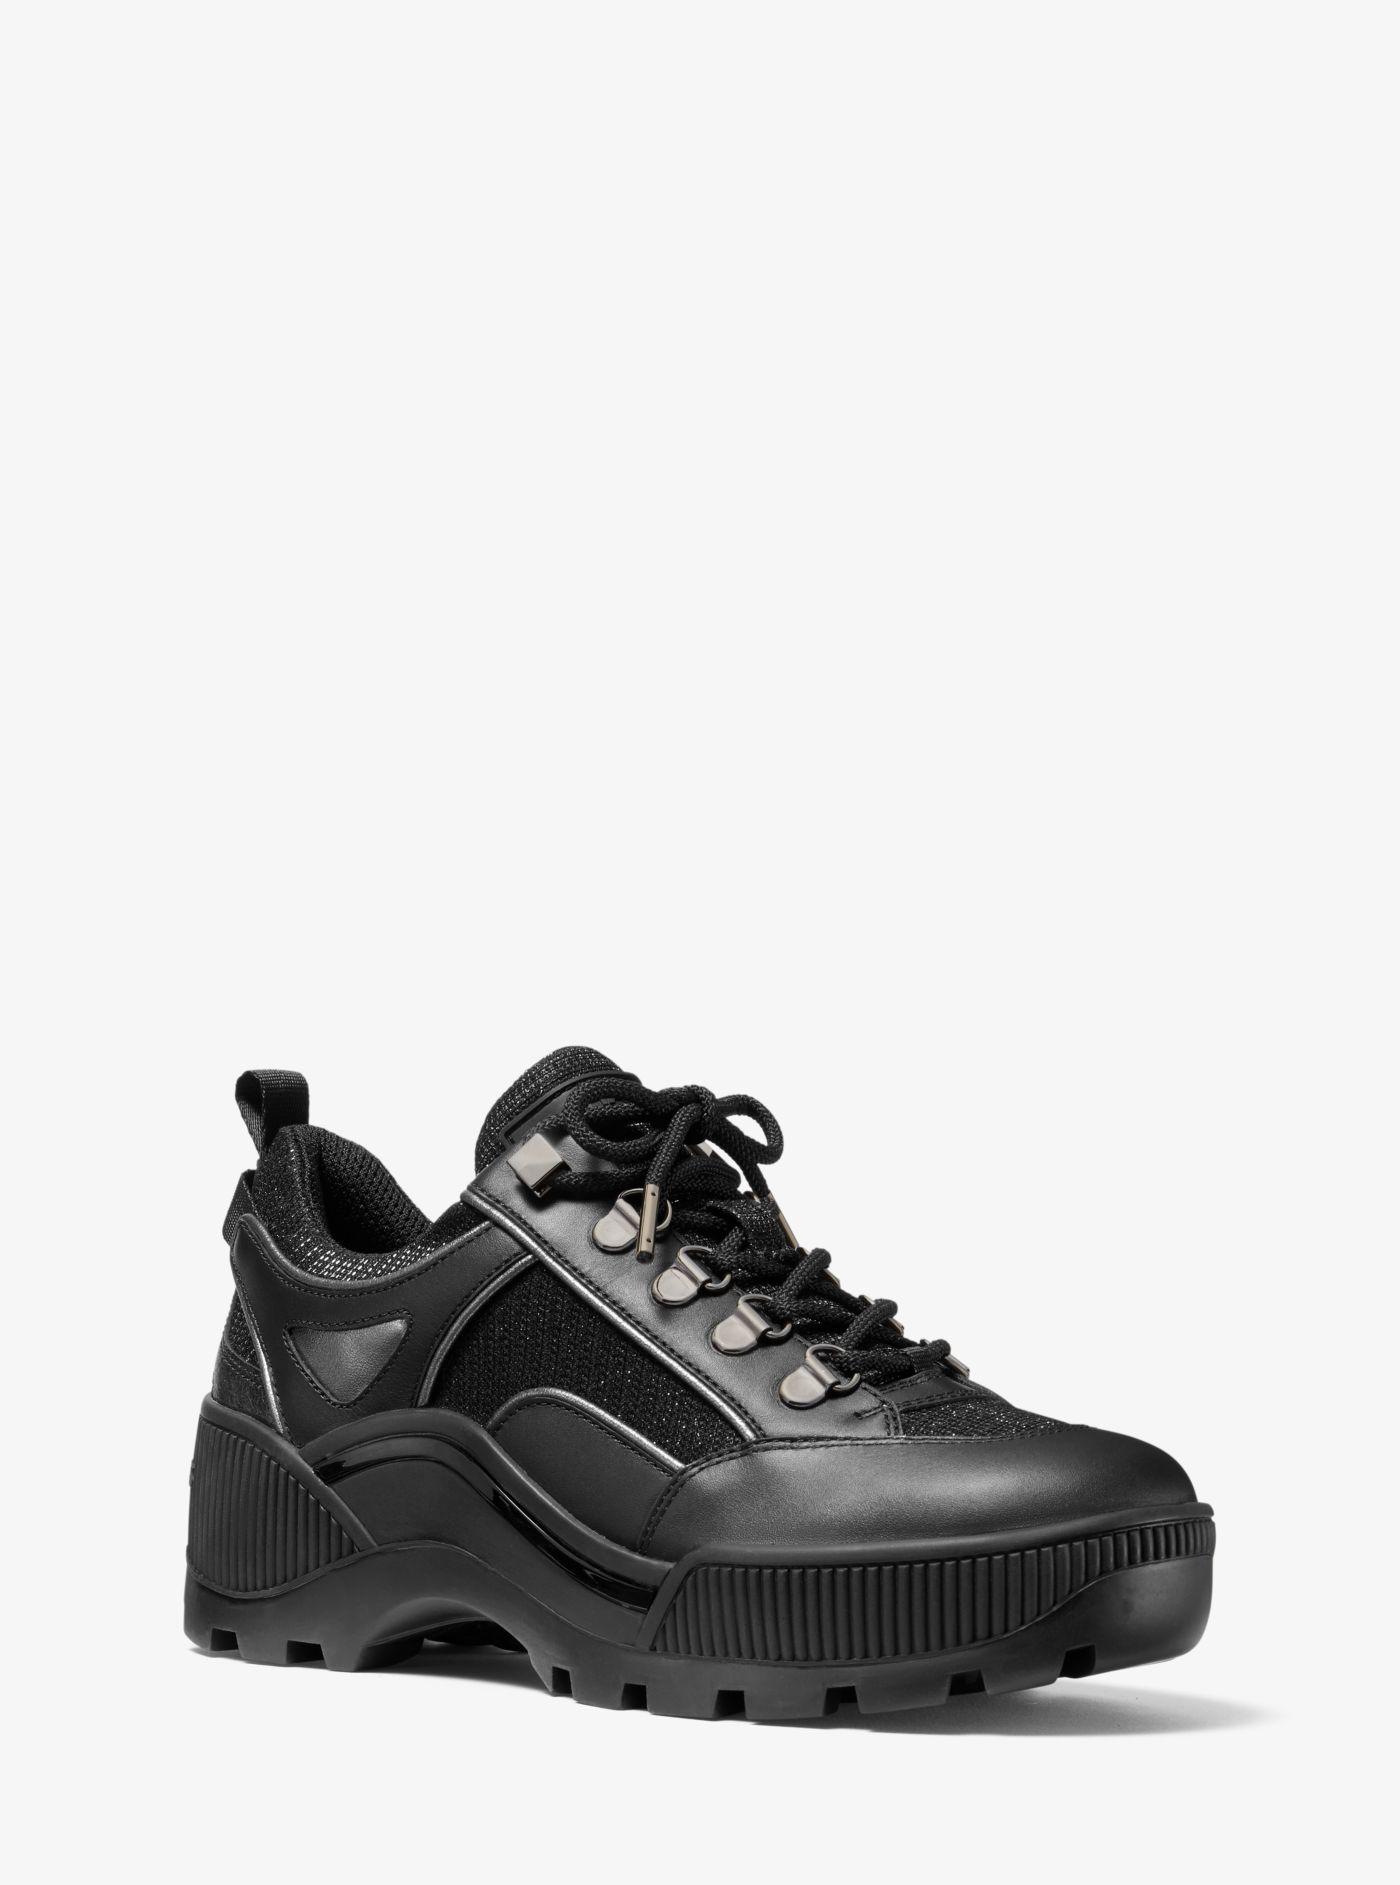 michael kors black glitter sneakers